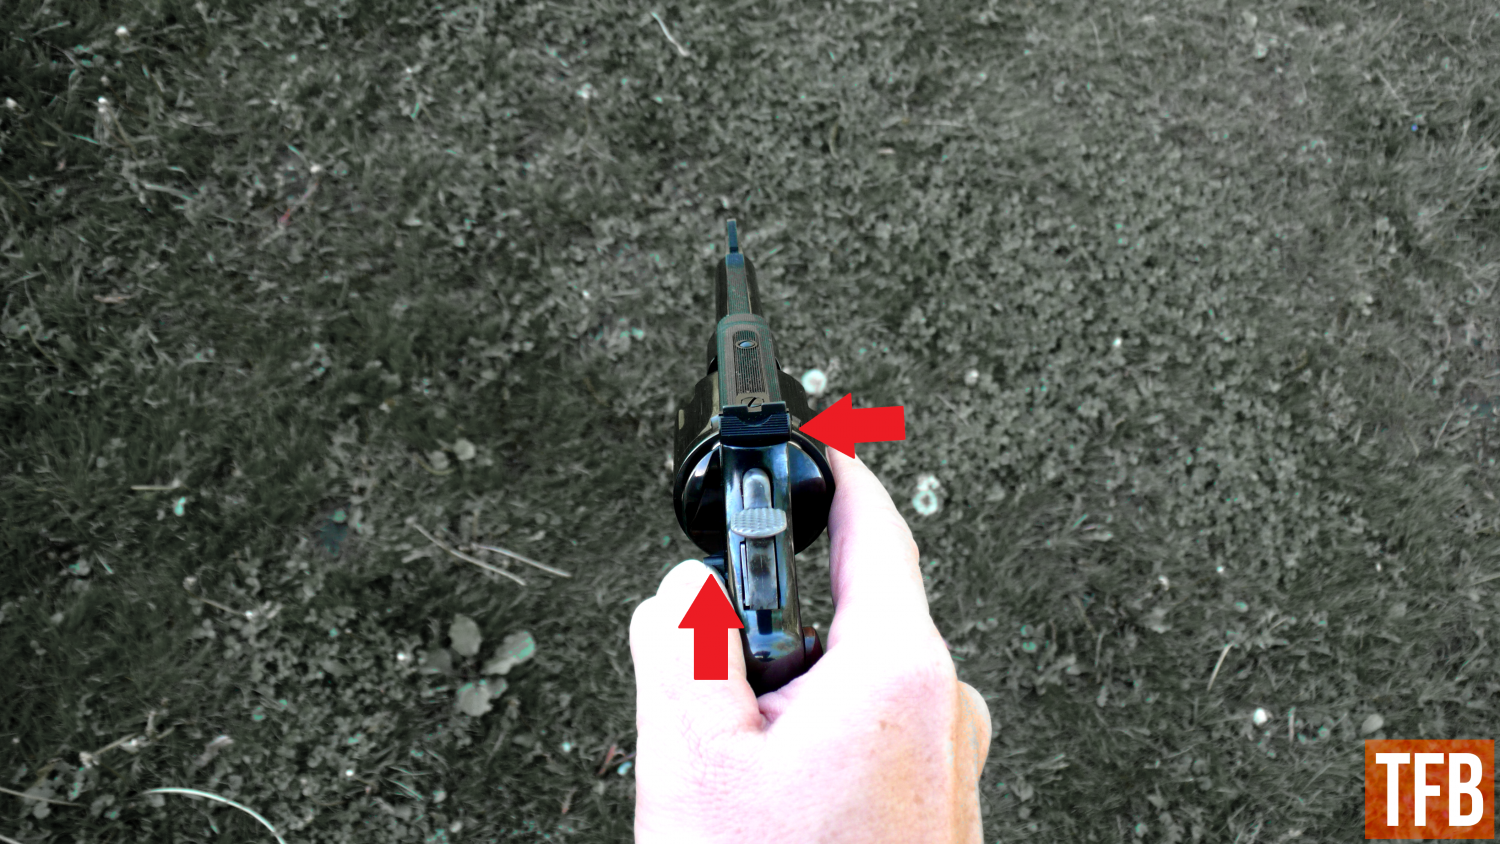 One handed revolver reloads